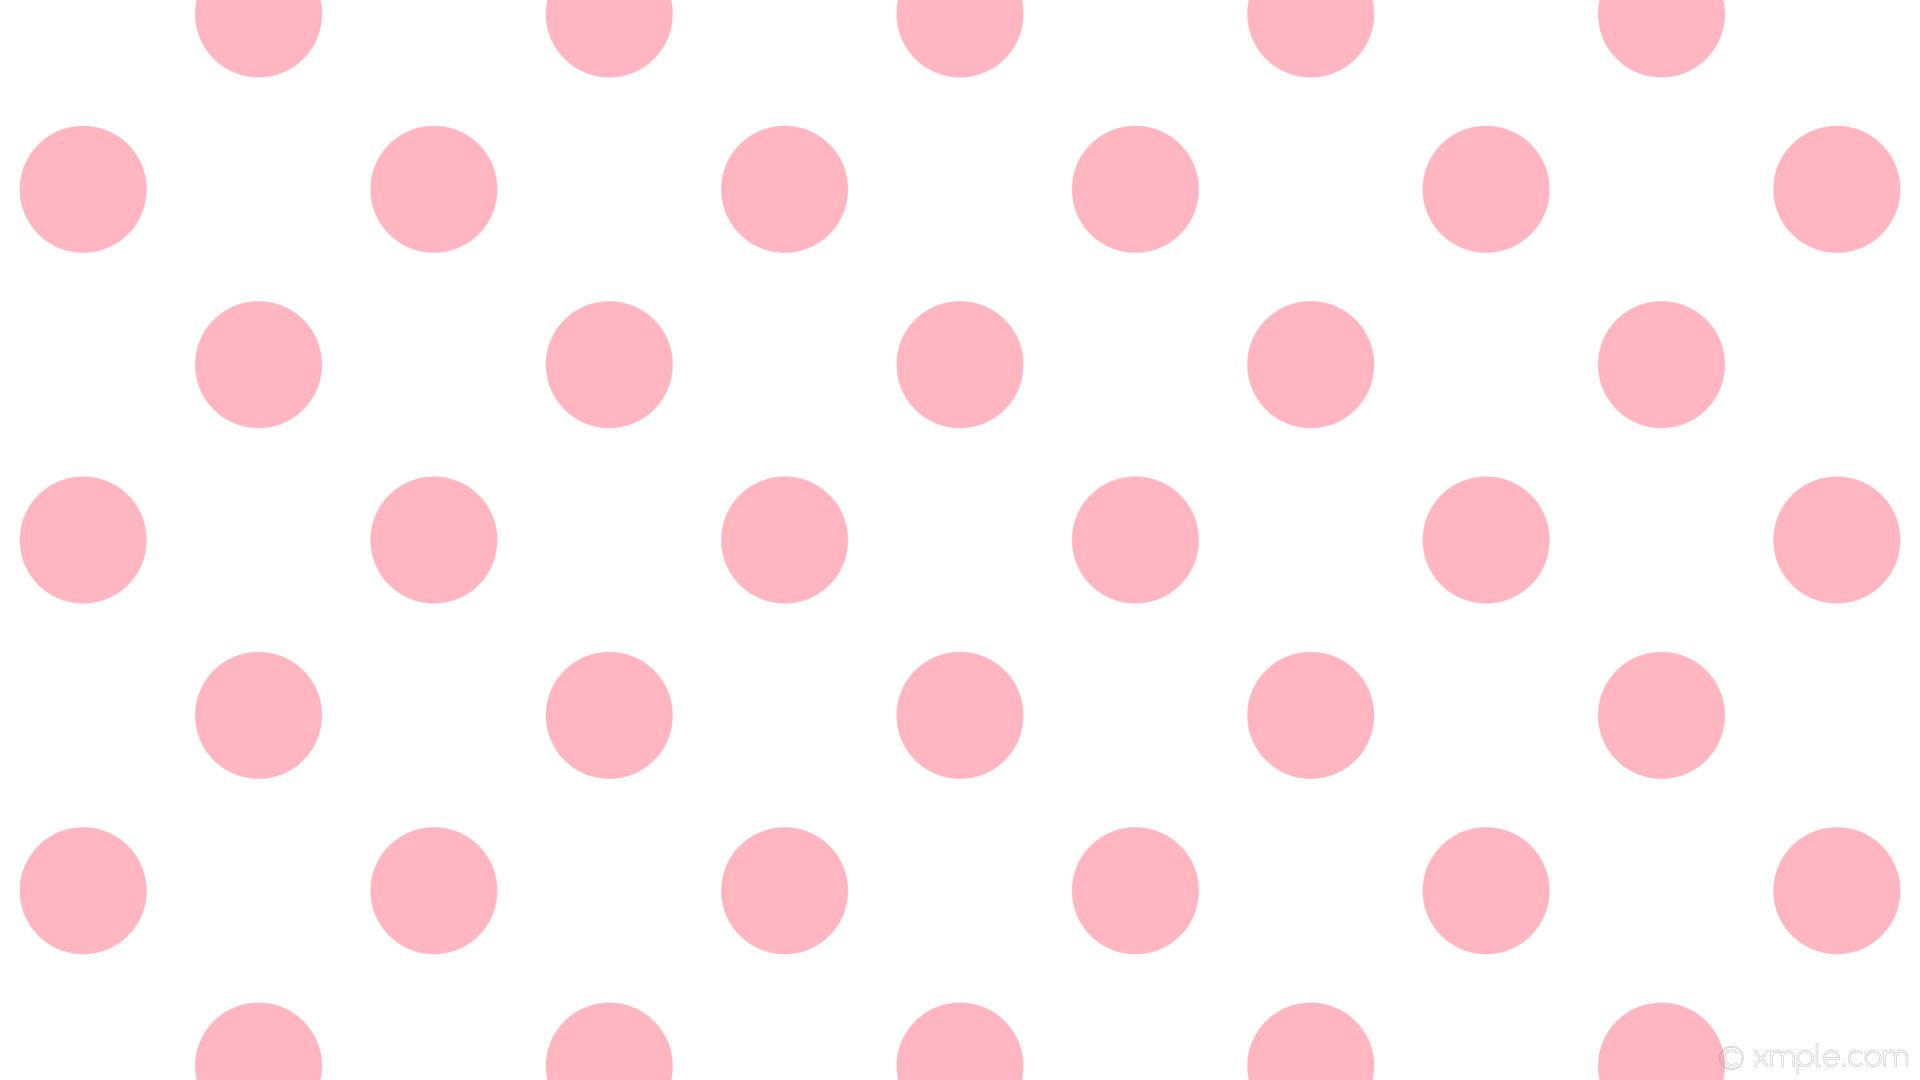 Pastel Polka Dot Wallpapers - 4k, HD Pastel Polka Dot Backgrounds on